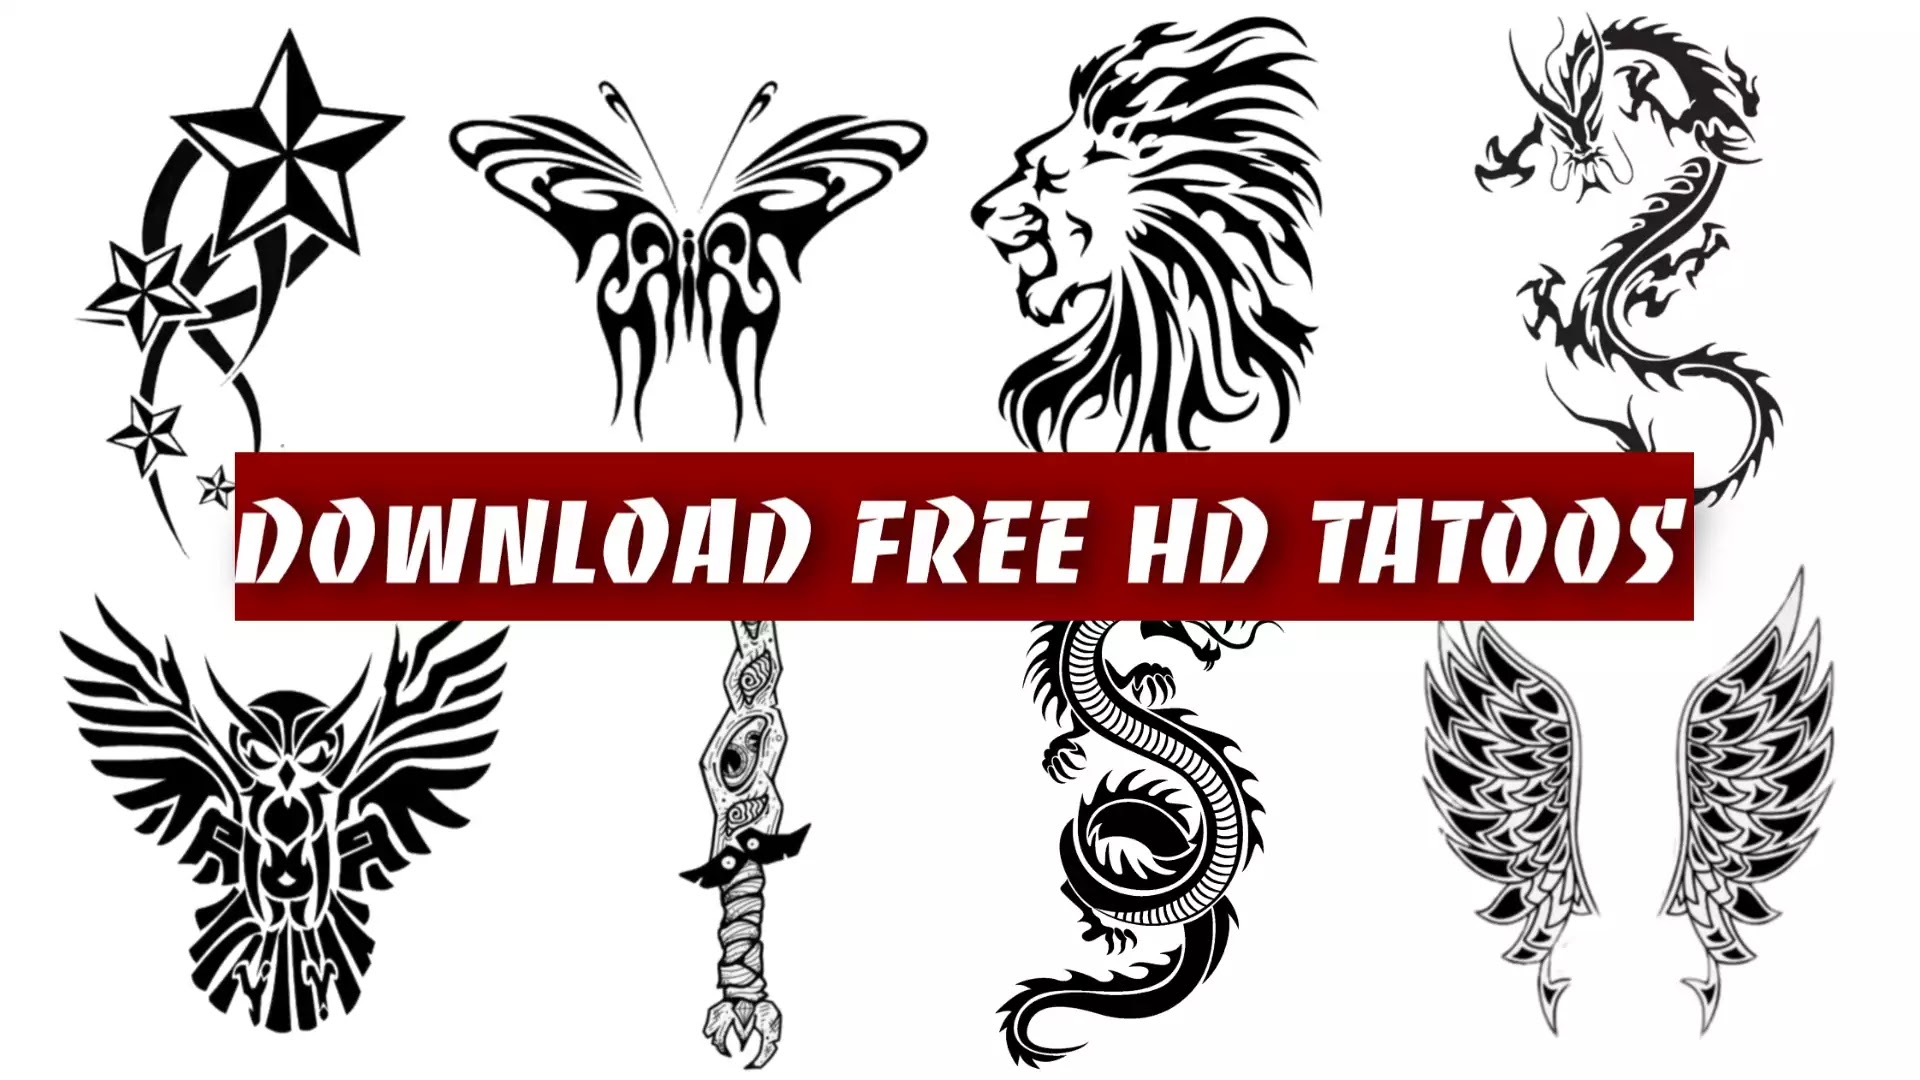 Snake Tattoo Free Download Png  Tribal Snake Tattoo Designs PNG Image   Transparent PNG Free Download on SeekPNG